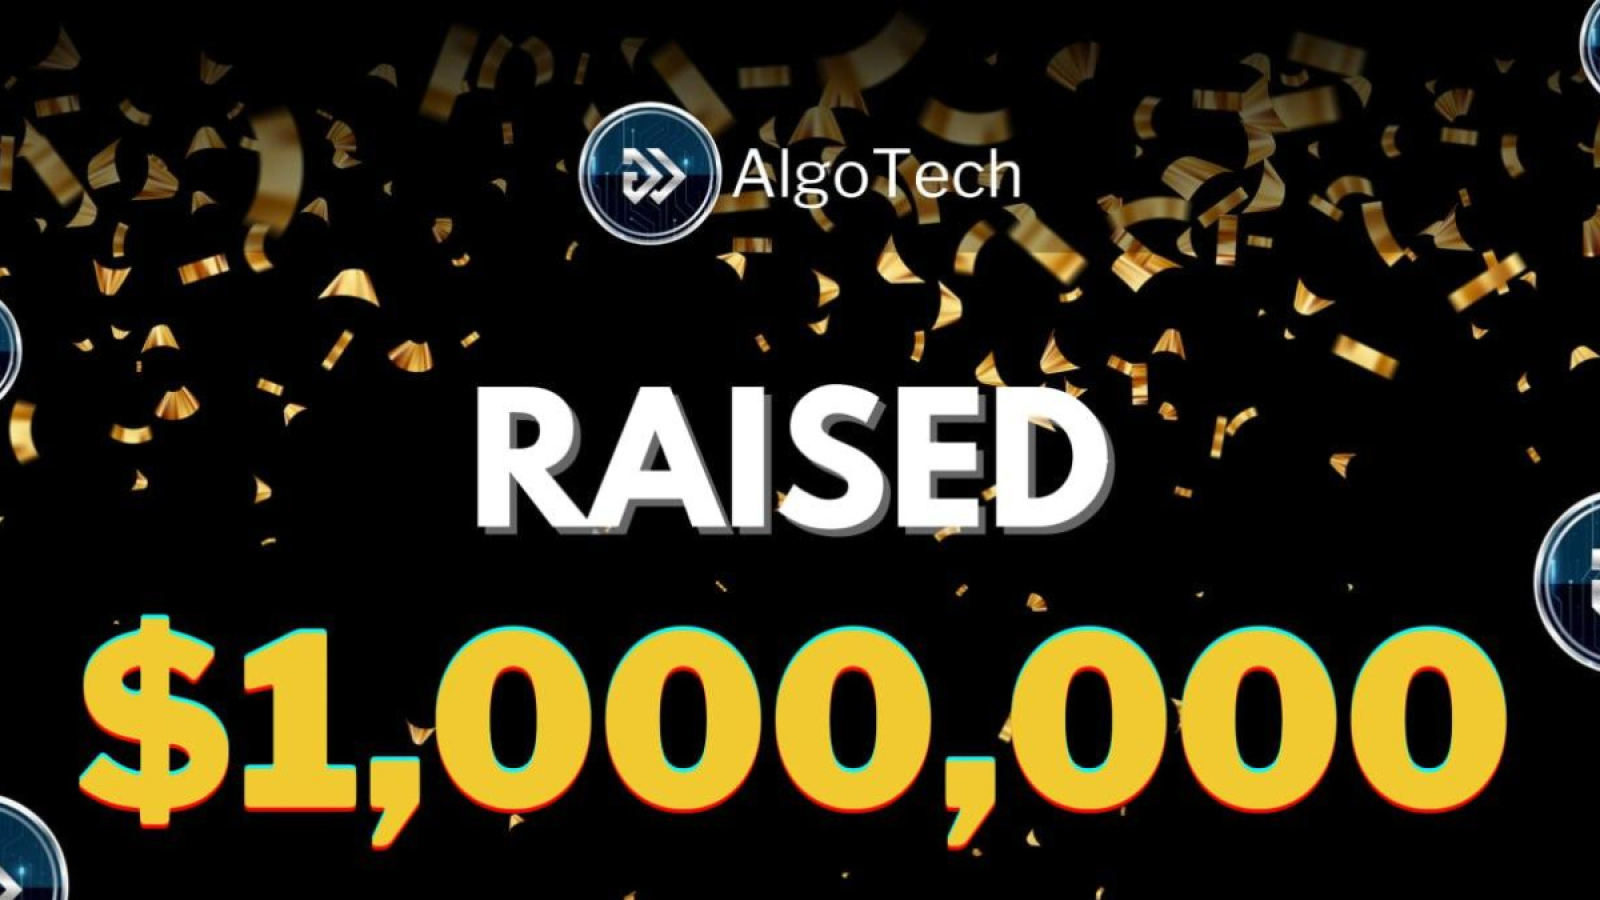 Algotech Presale Revolutionizes DeFi Scene, Surpassing $1 Million Raised in Just Weeks